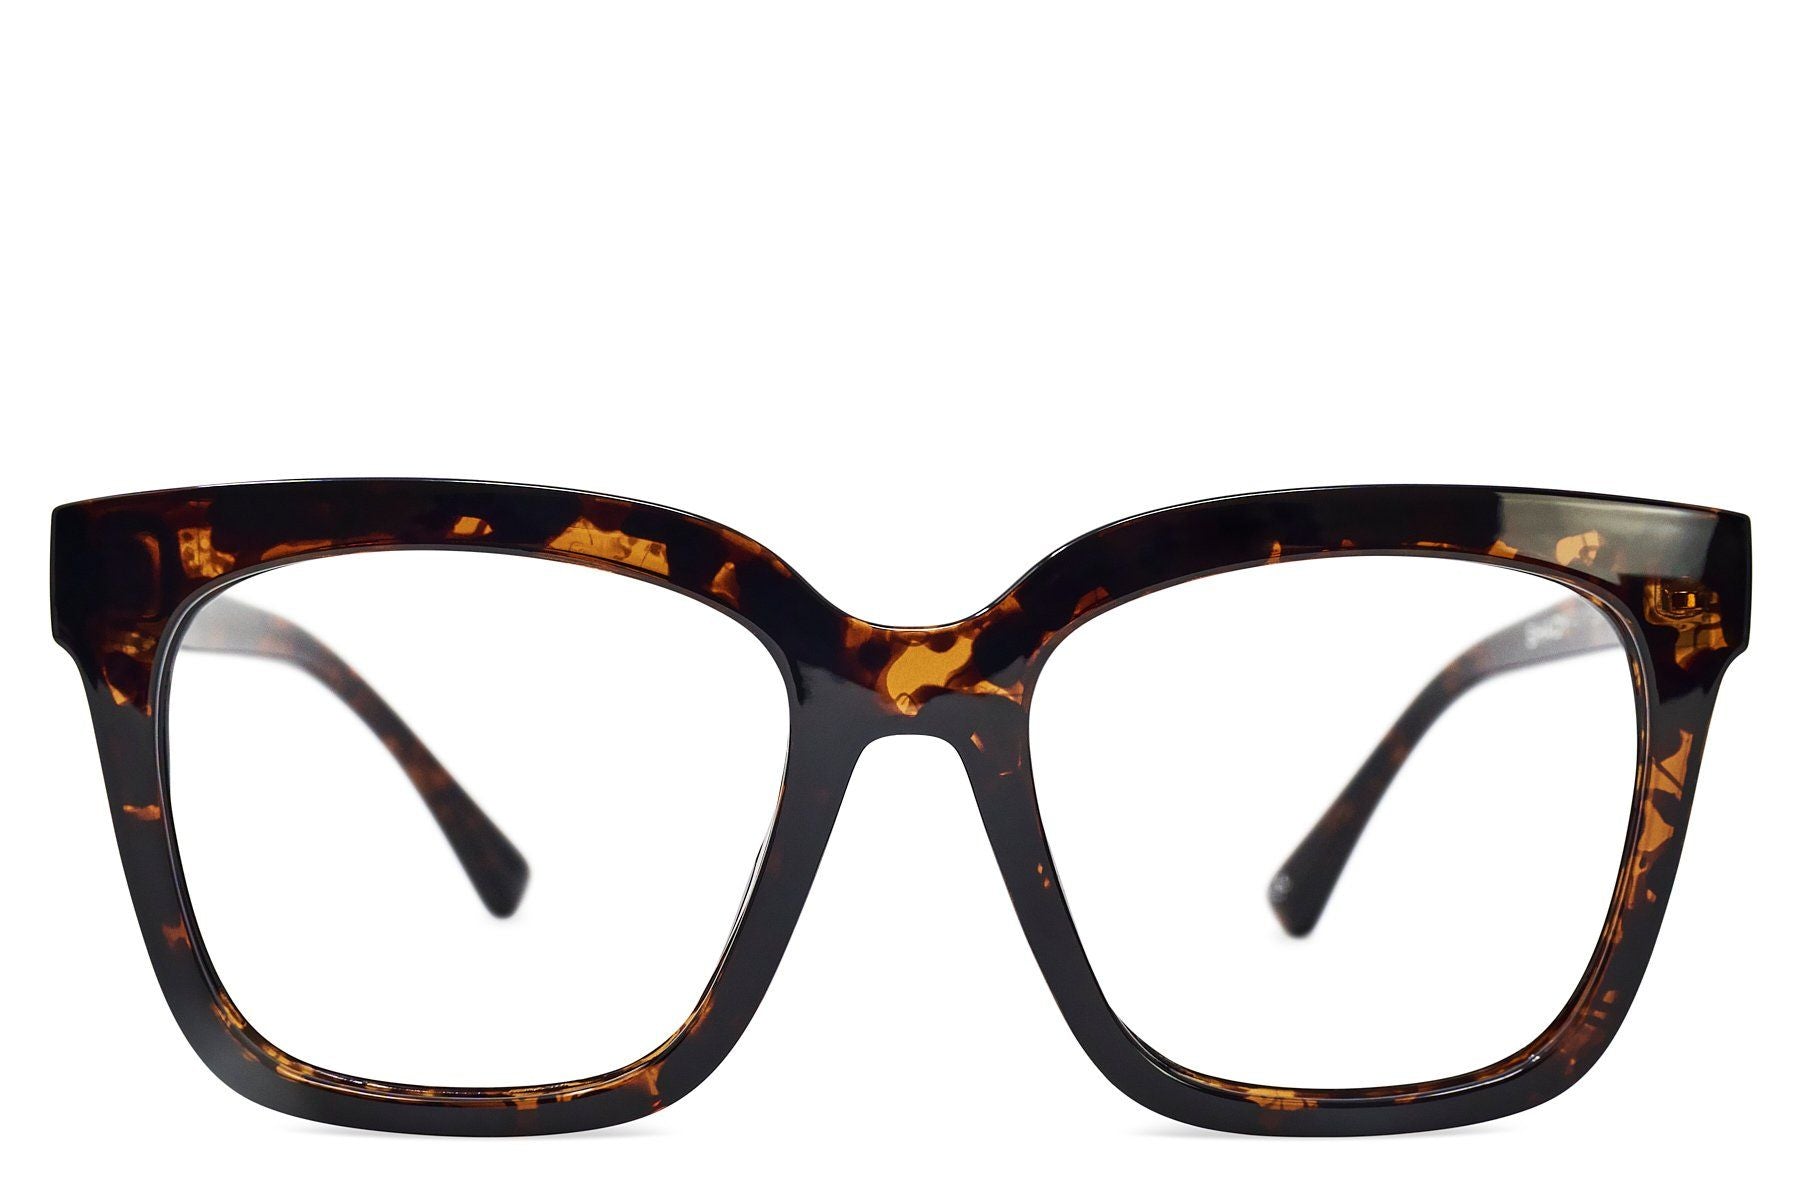 Azalea Rx - Sienna Tortoise Rx Shady Rays® | Polarized Sunglasses 